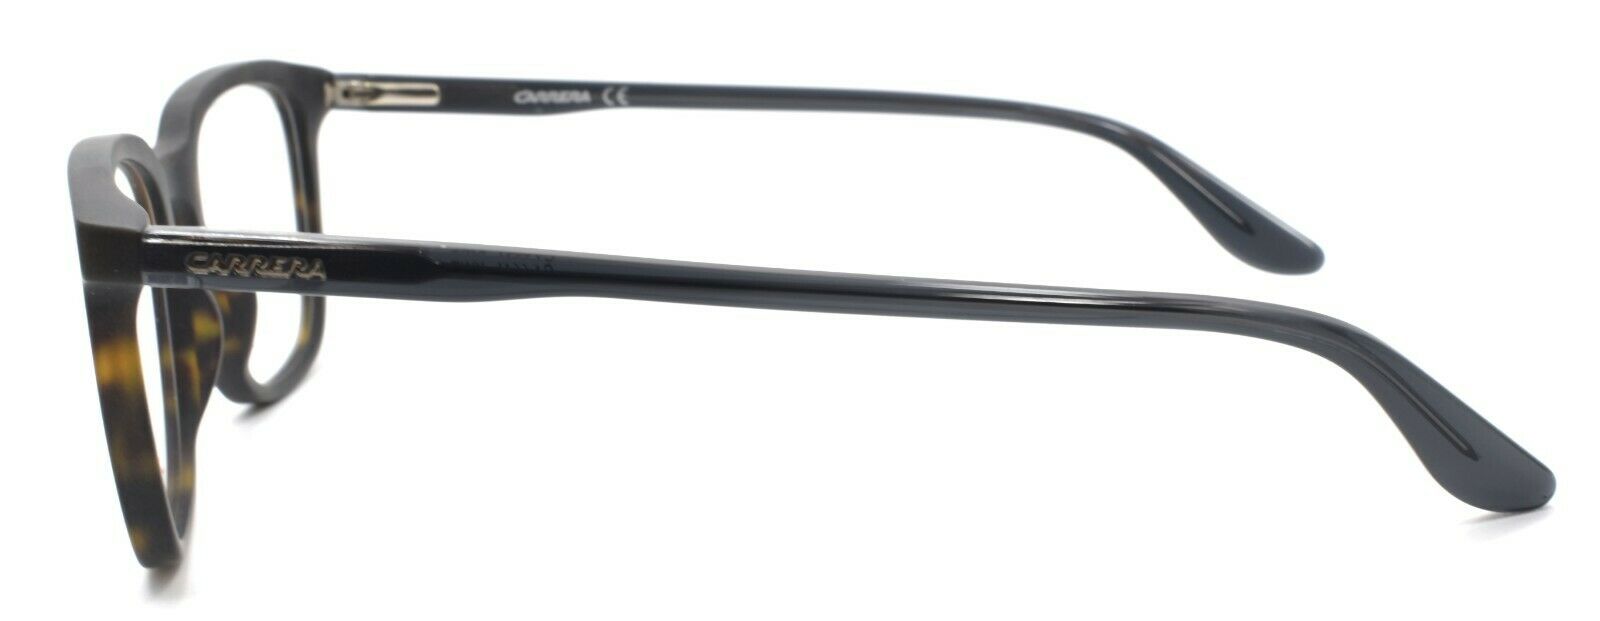 3-Carrera CA6641 KWZ Men's Eyeglasses Frames 51-18-145 Havana / Grey + CASE-762753908179-IKSpecs